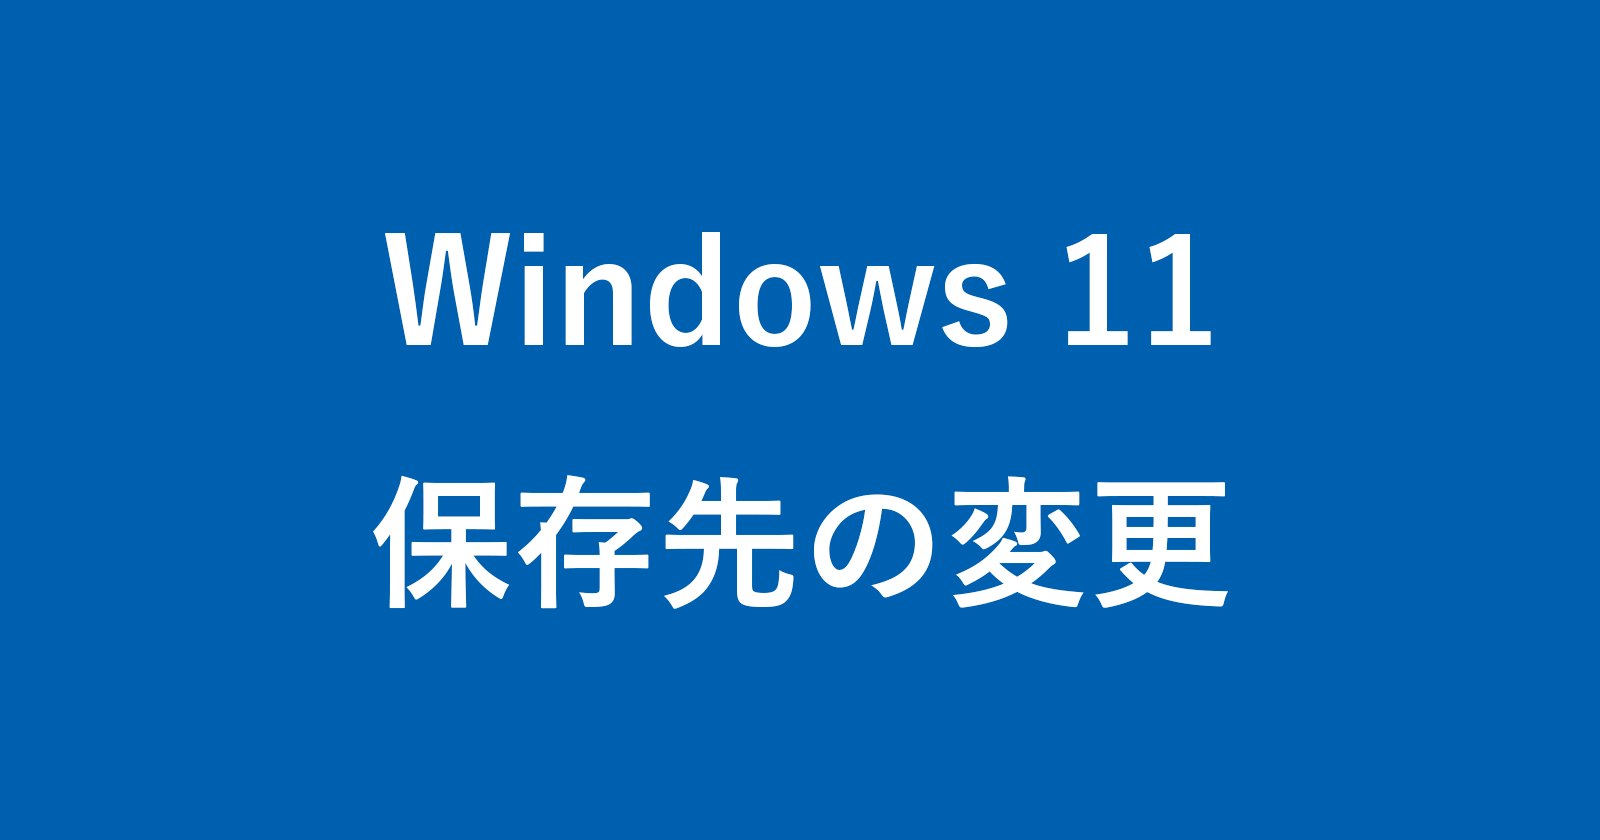 windows 11 save location